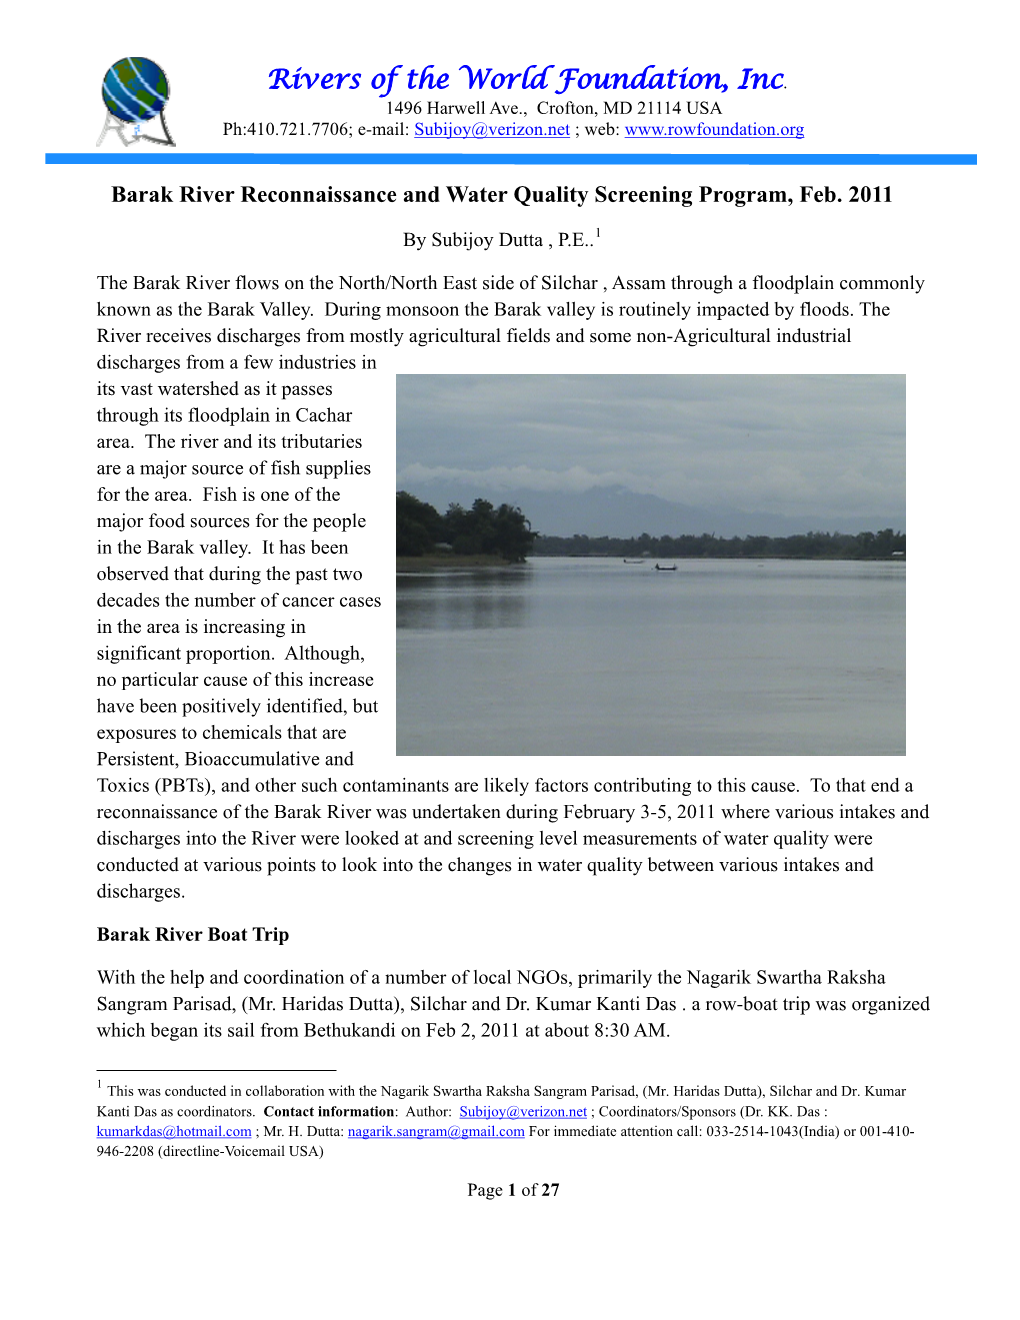 Barak River Reconnaissance and Water Quality Screening Program, Feb